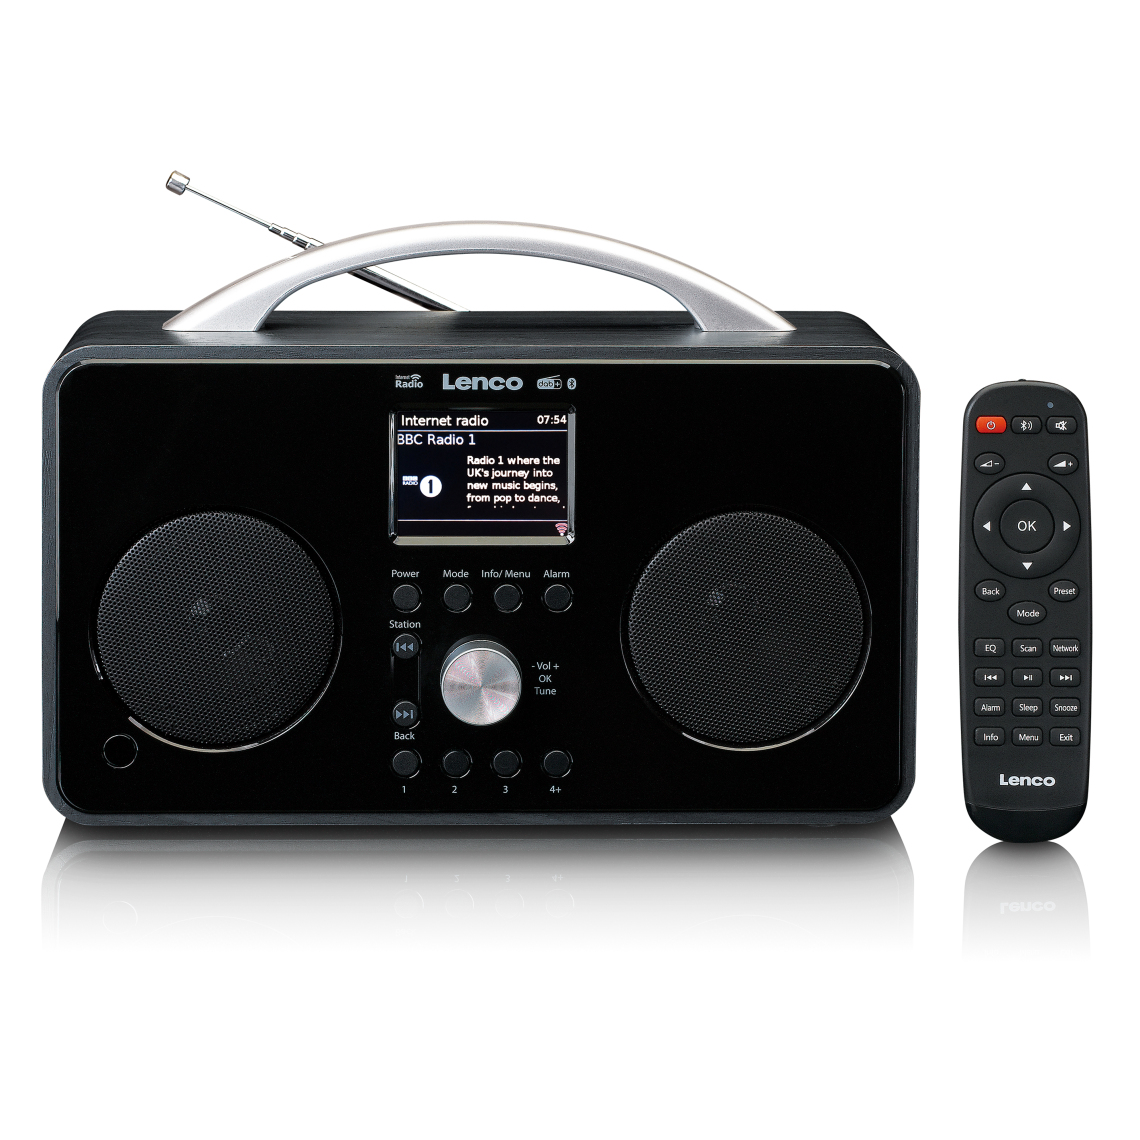 Lenco - Radio portable FM / Internet / DAB+ avec Bluetooth PIR-645BK Noir-Argent - Radio